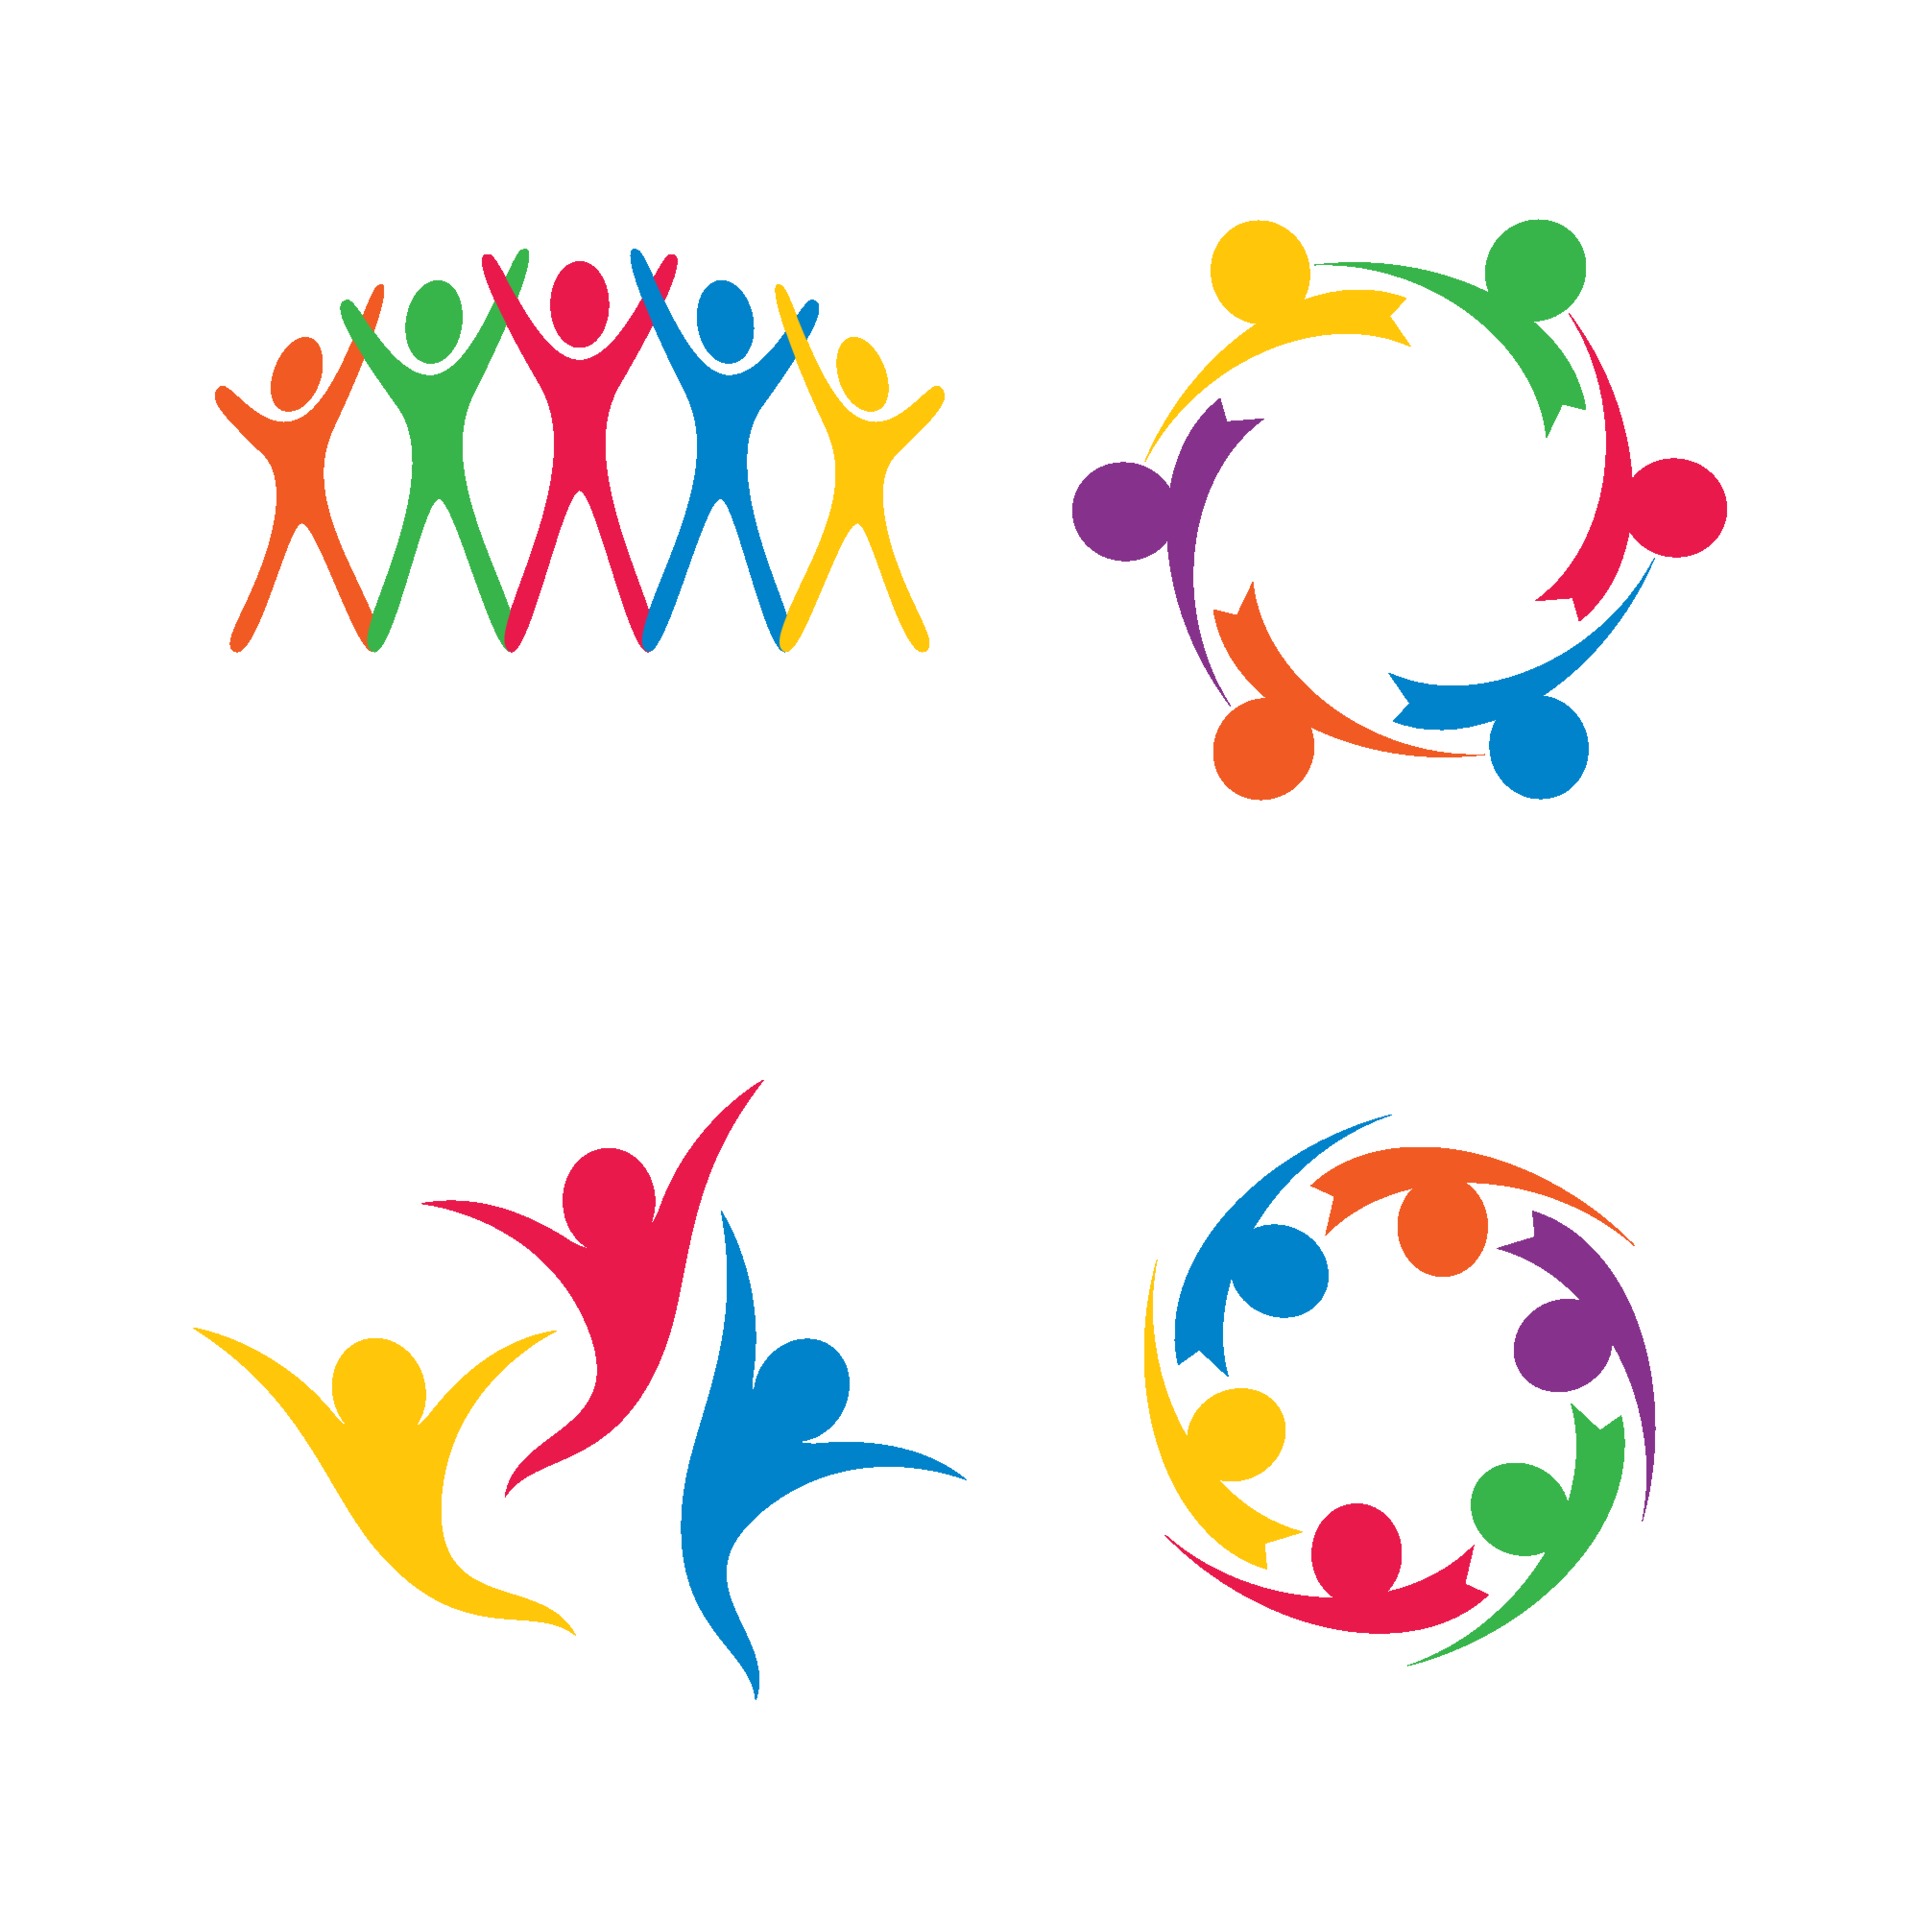 Community care logo images design set 2085108 Vector Art at Vecteezy